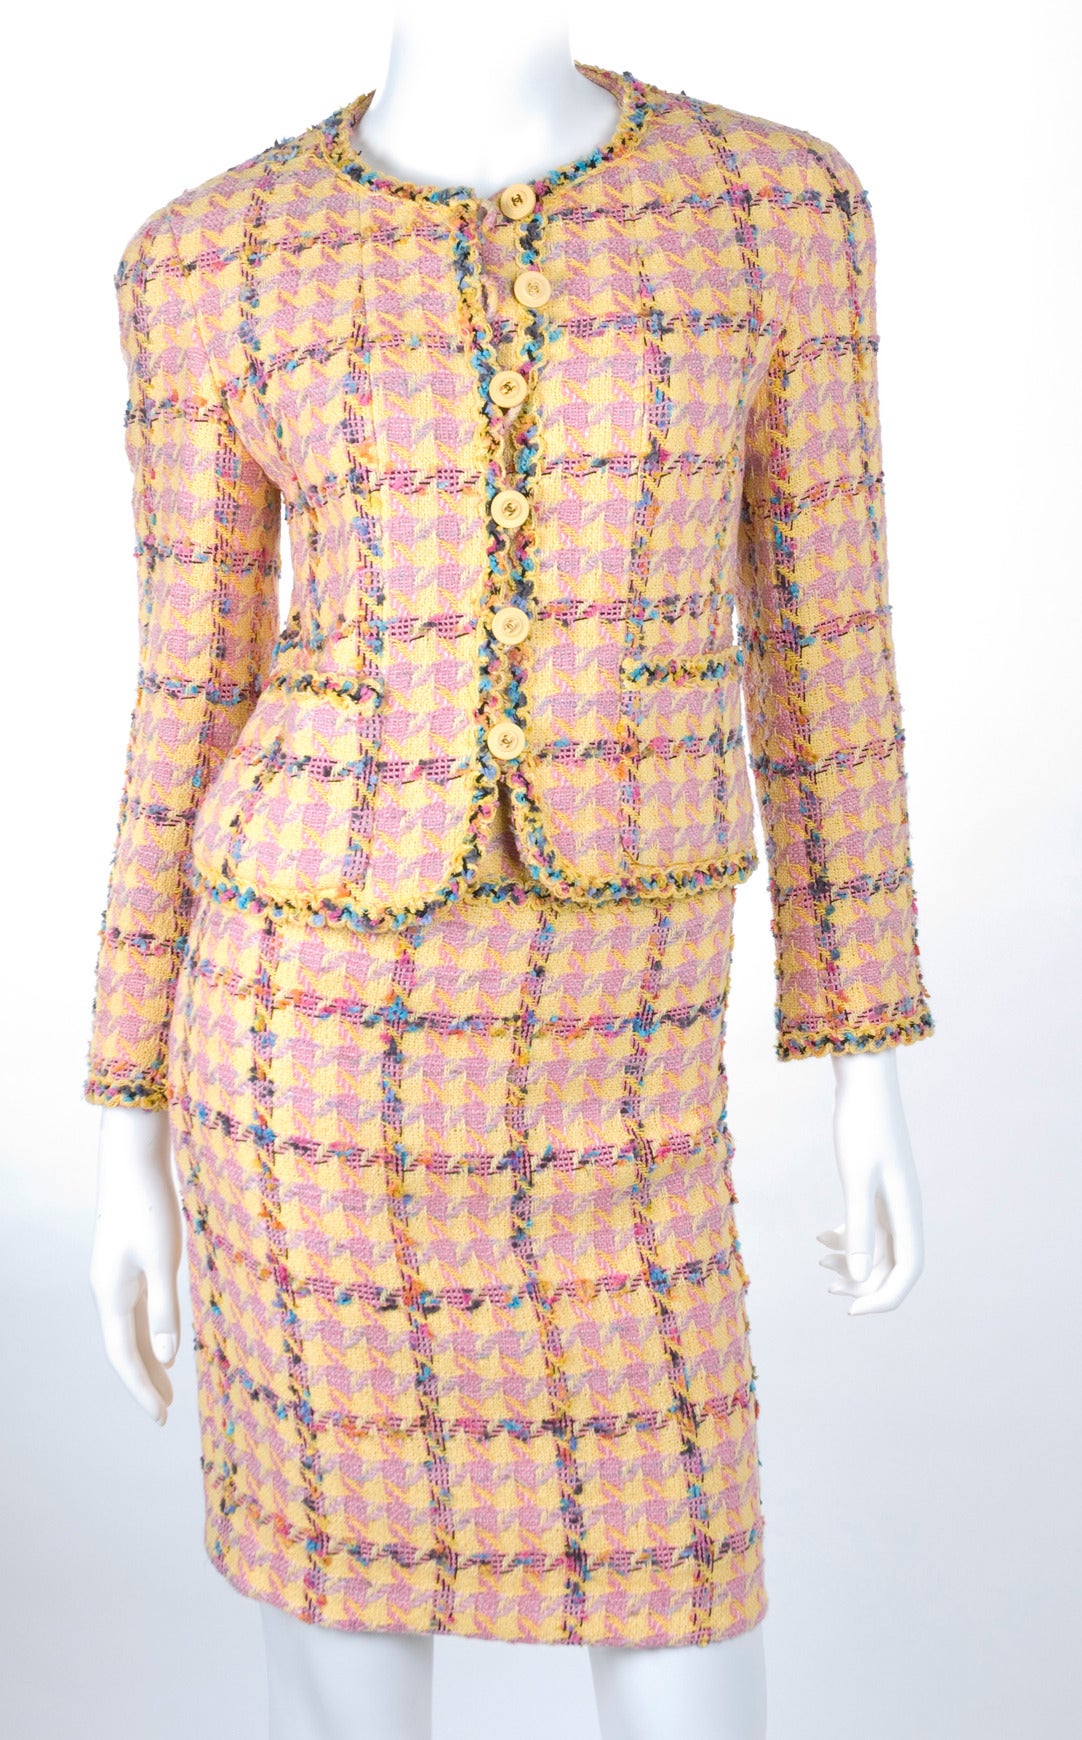 Chanel Suit in yellow, pink, blue and lavender.
CC logo buttons.
Size 38 EU
Measurements:
Jacket: Length 47 cm - 18.5